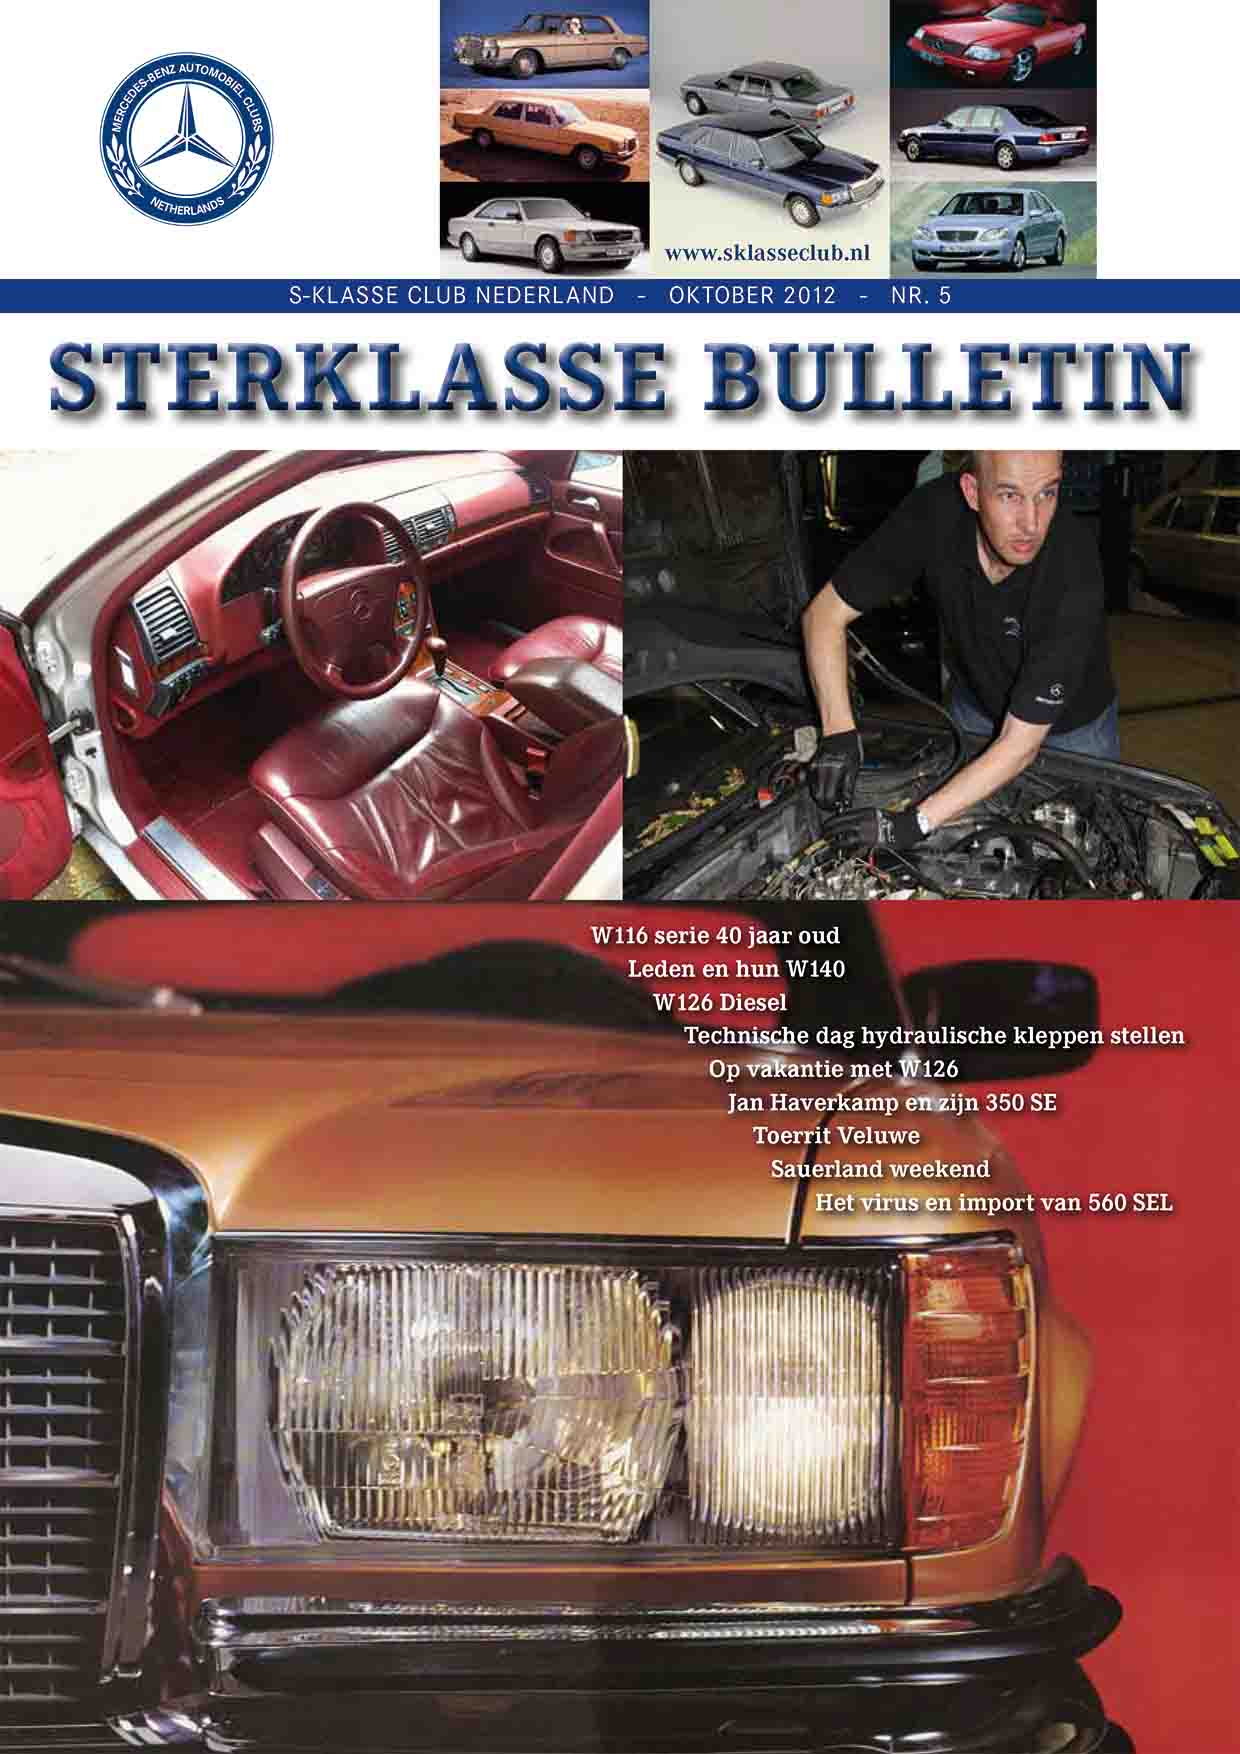 Sterklasse Bulletin 13 SKCN Mercedes-Benz S-Klasse Club Nederland